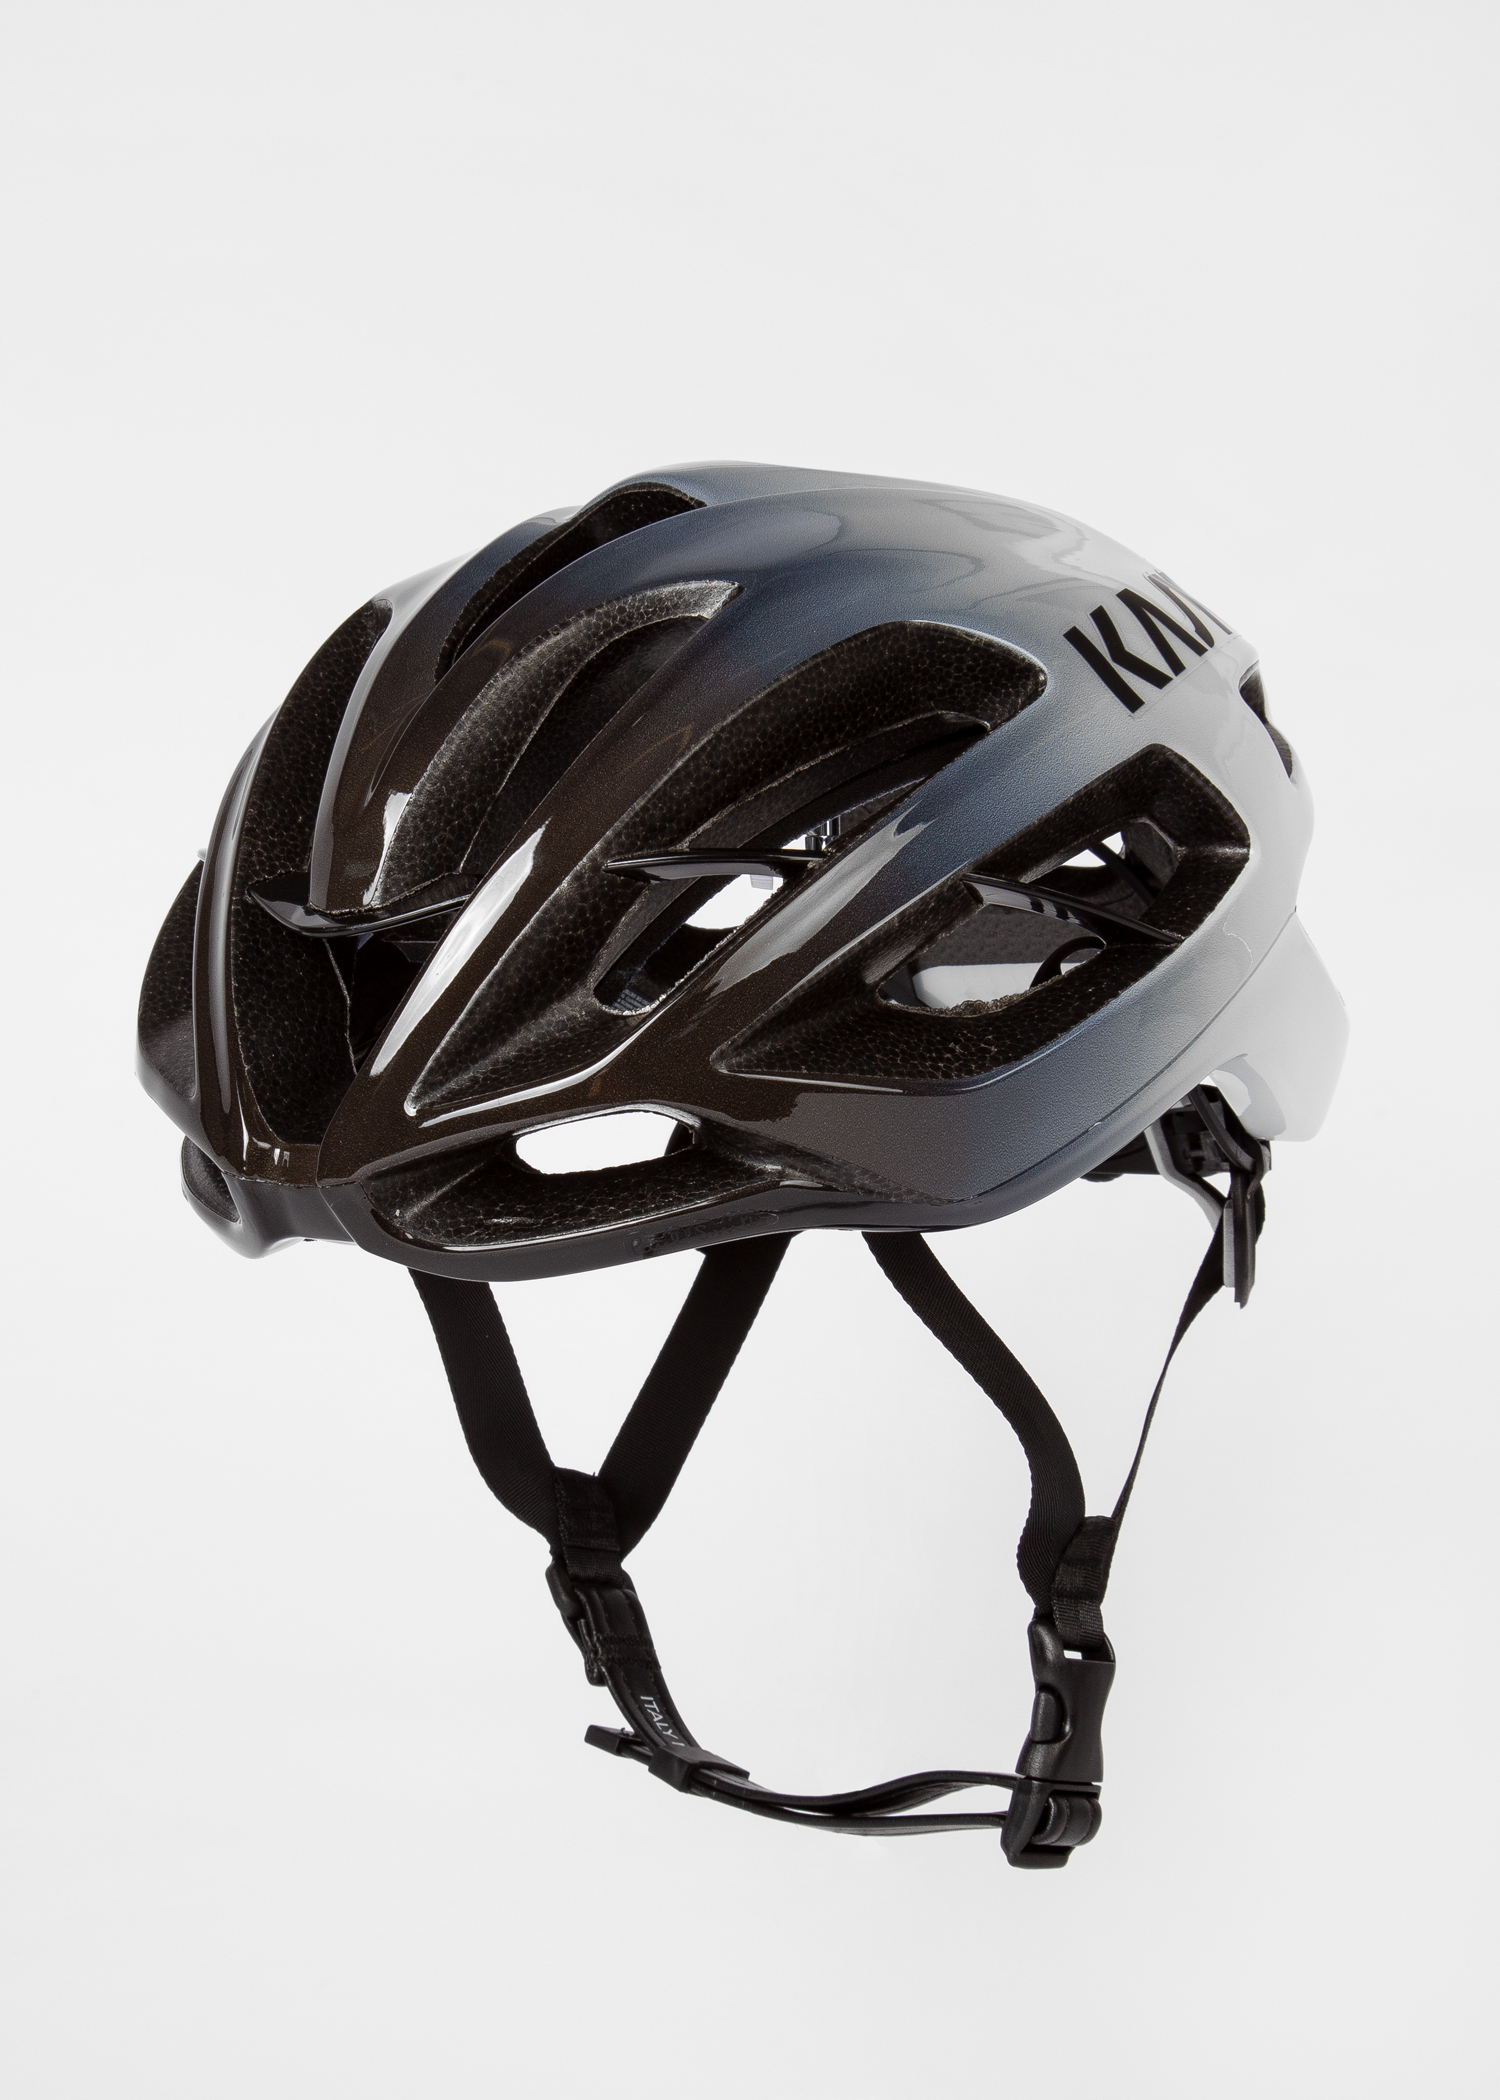 Paul Smith + Kask 'Monochrome Fade' Protone Cycling Helmet